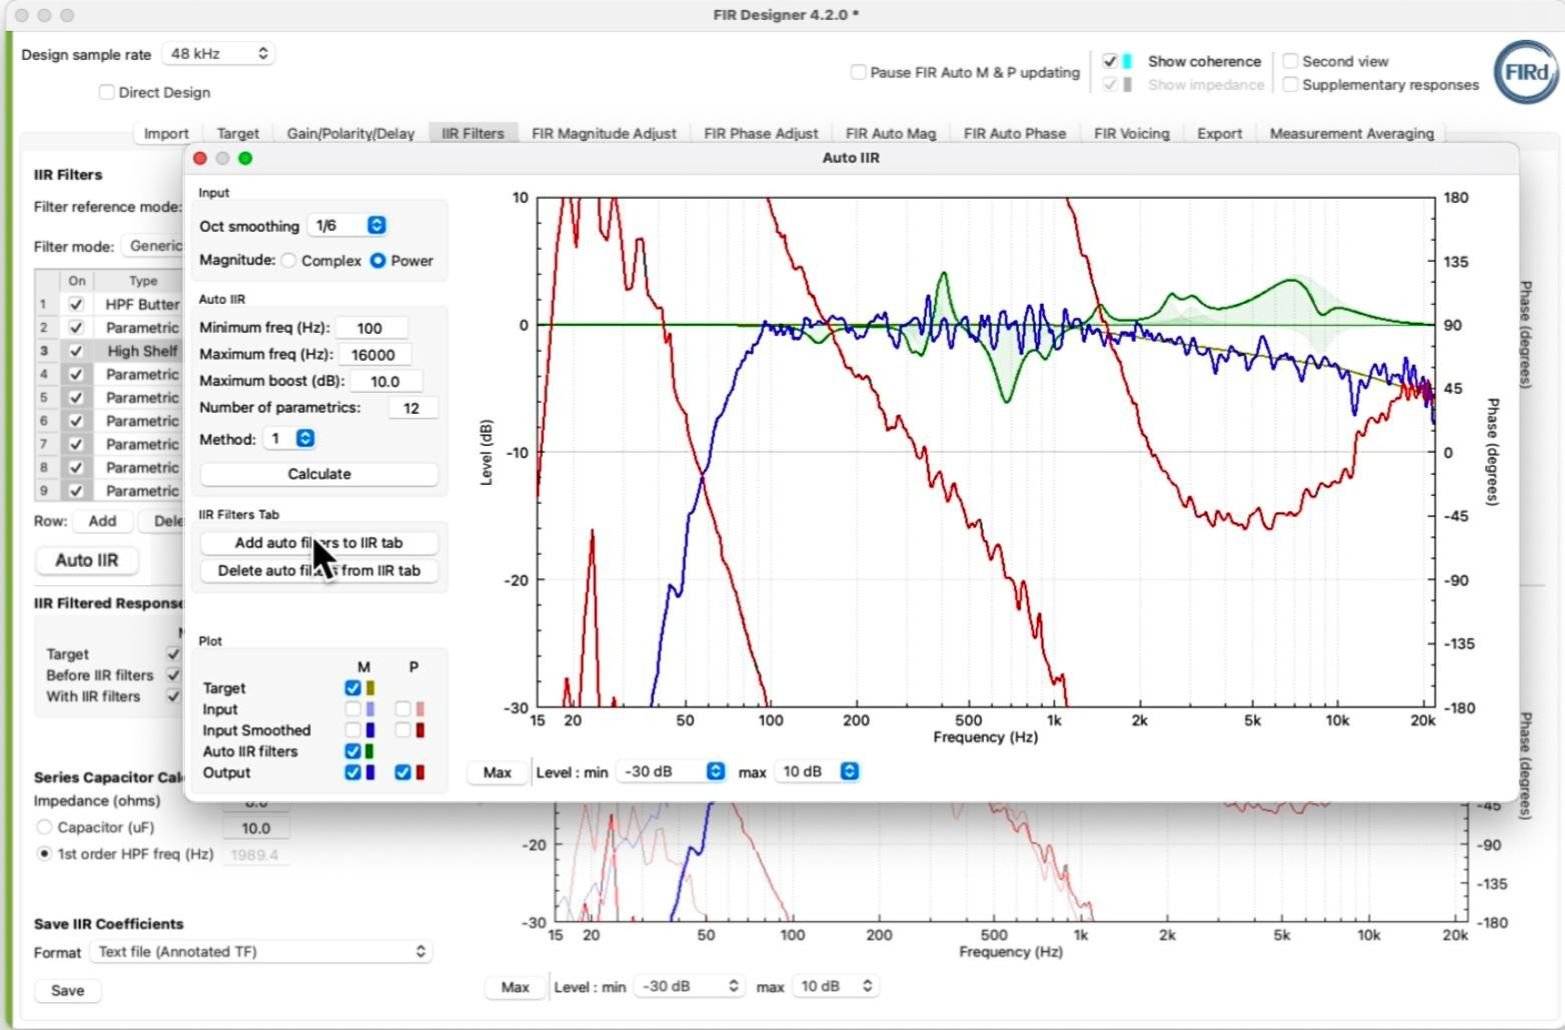 Screenshot of Auto IIR window in FIR Designer software